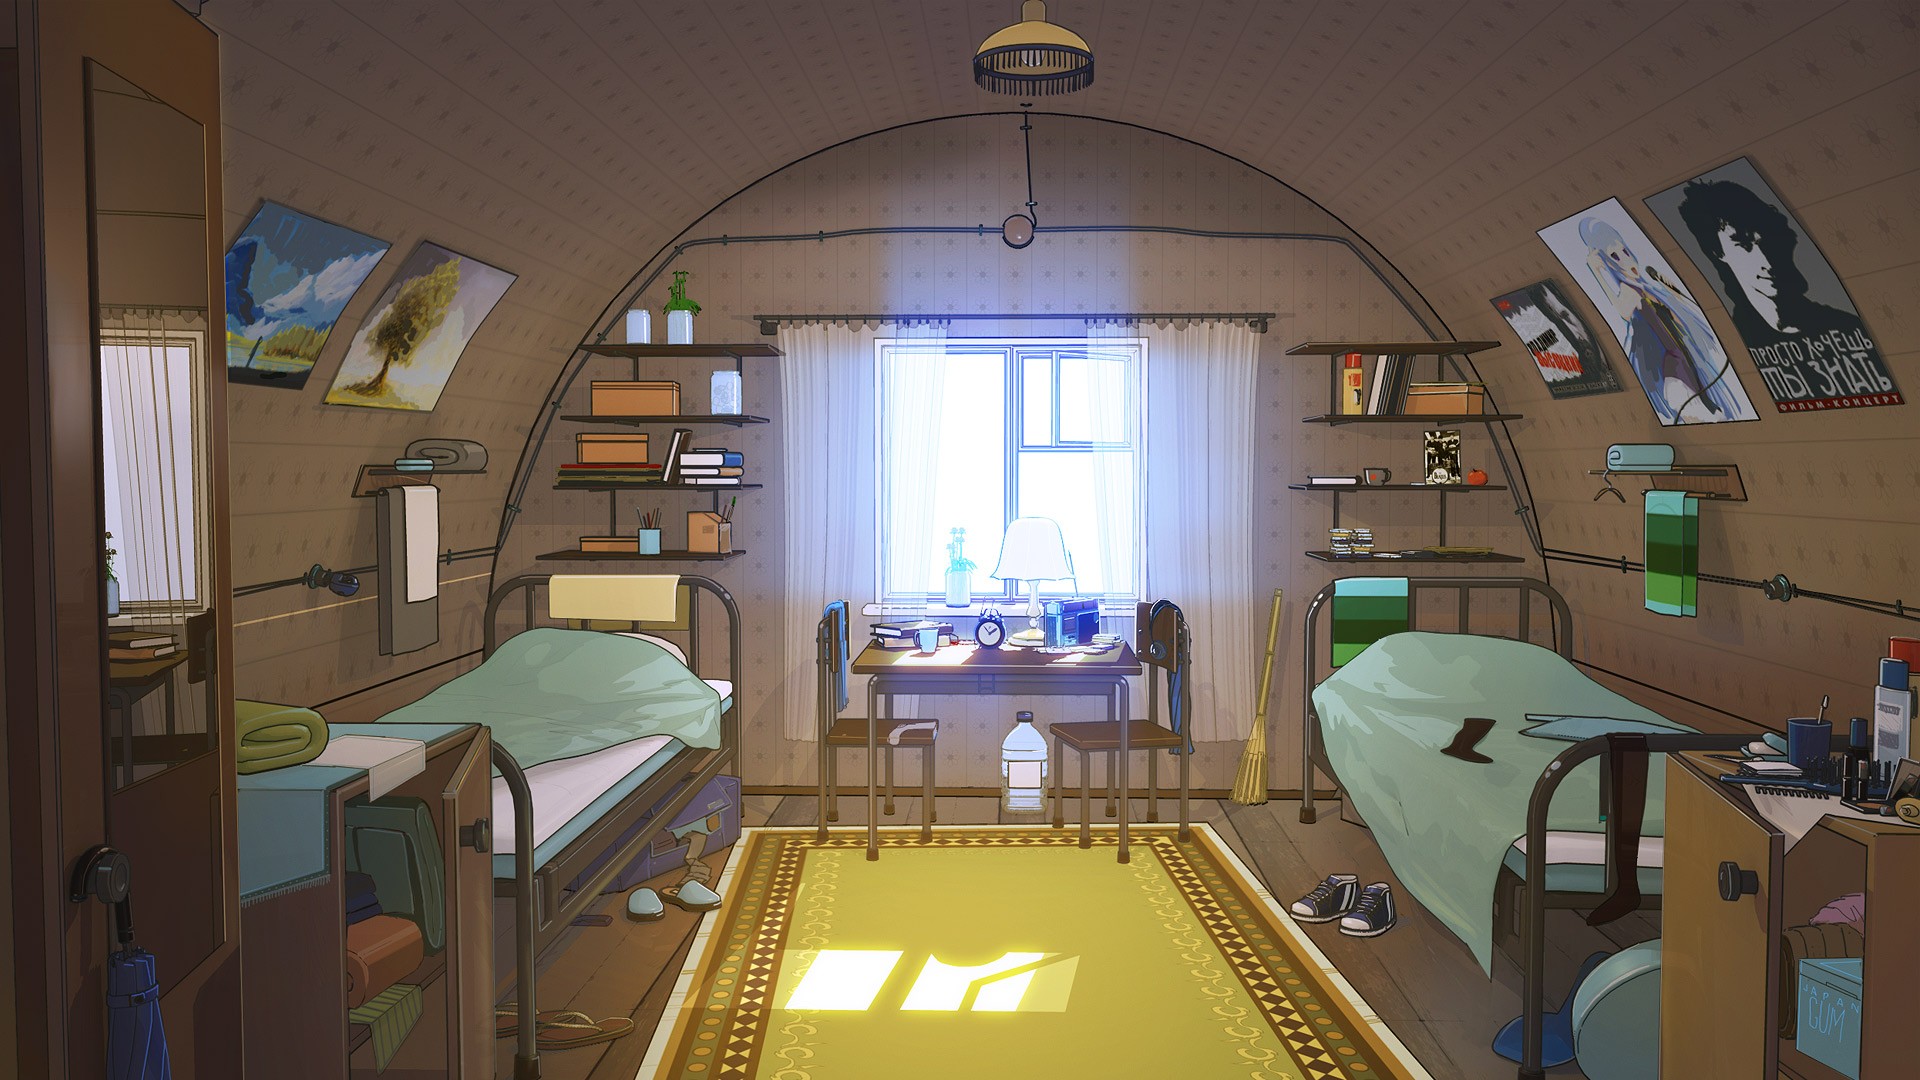 General 1920x1080 Everlasting Summer (visual novel) bed bedroom carpet indoors anime interior digital art